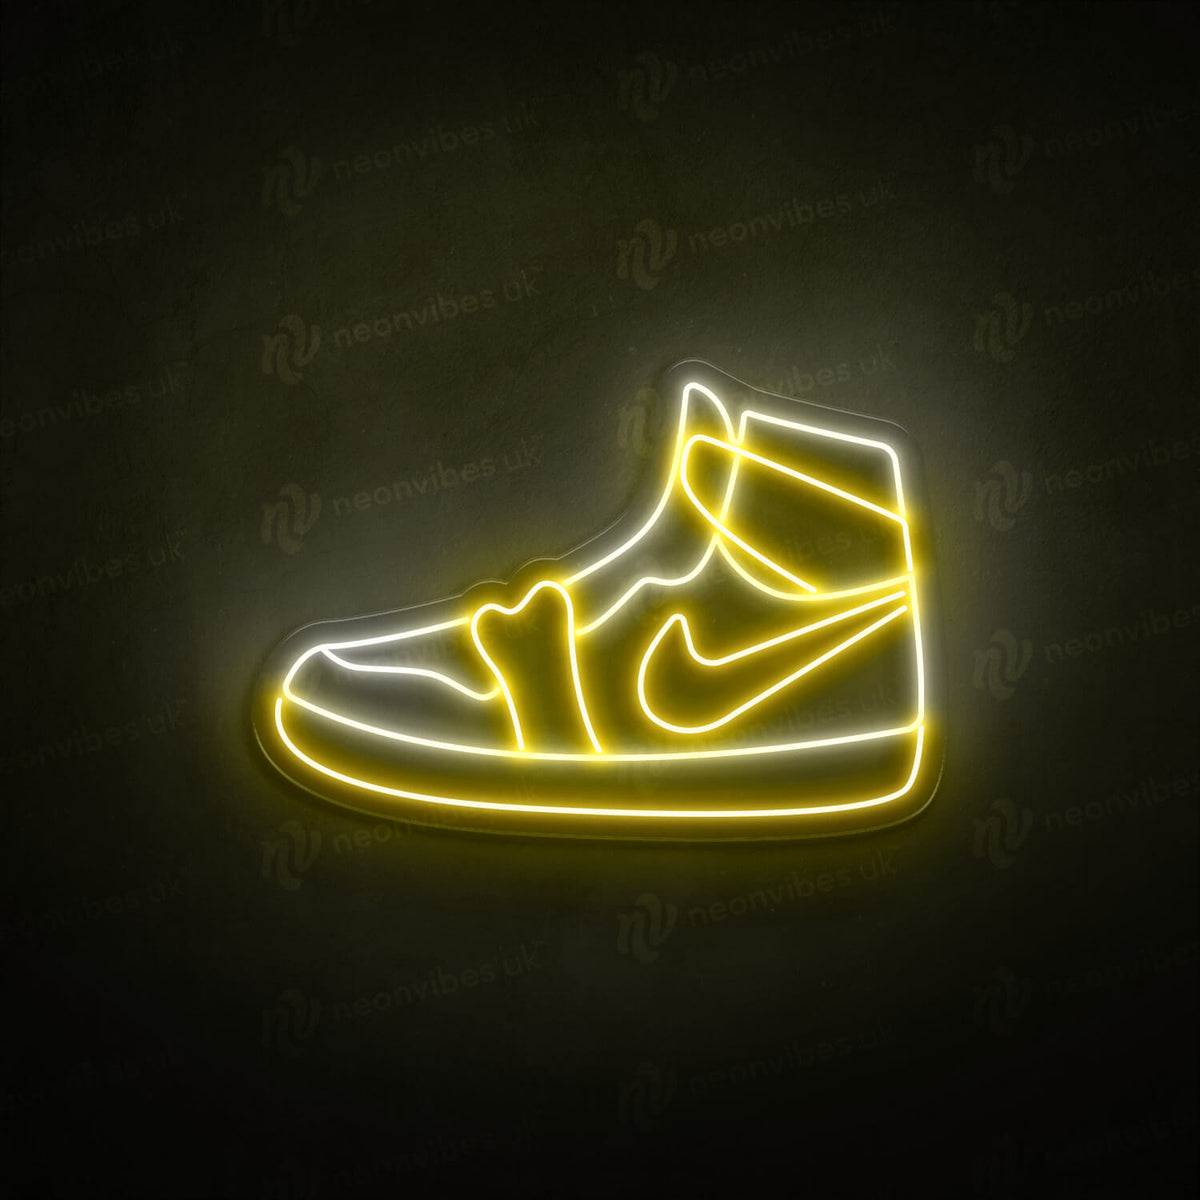 Shoe neon sign